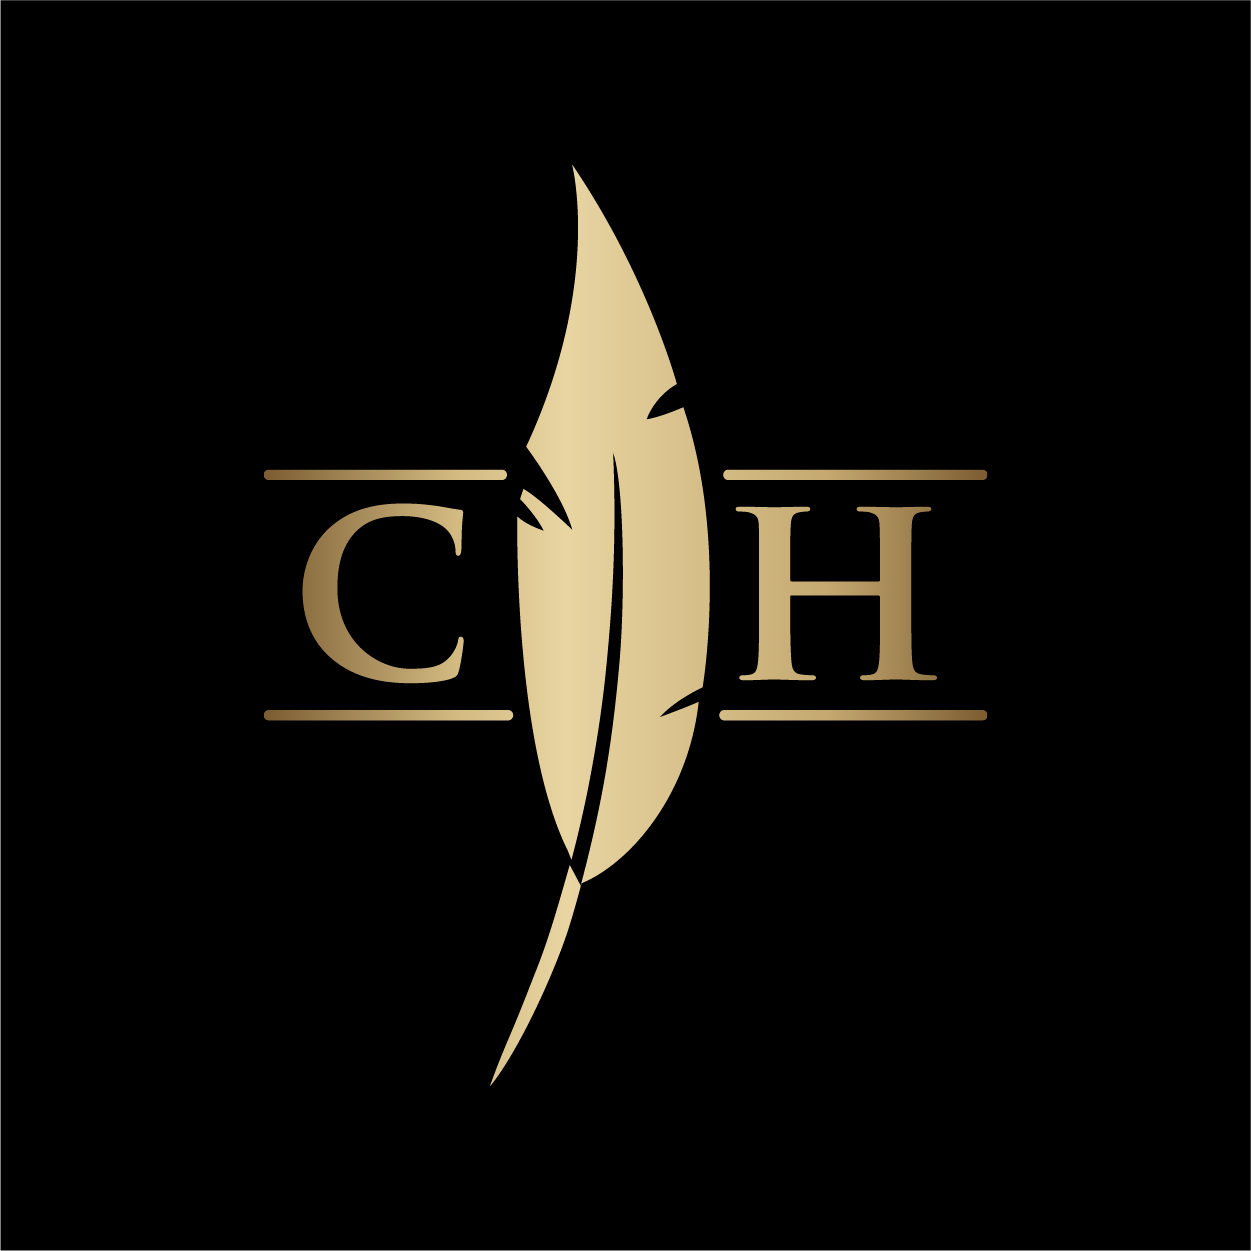 Cooper's Hawk Winery & Restaurant- Cincinnati - Cincinnati, OH 45236 - (513)488-1110 | ShowMeLocal.com